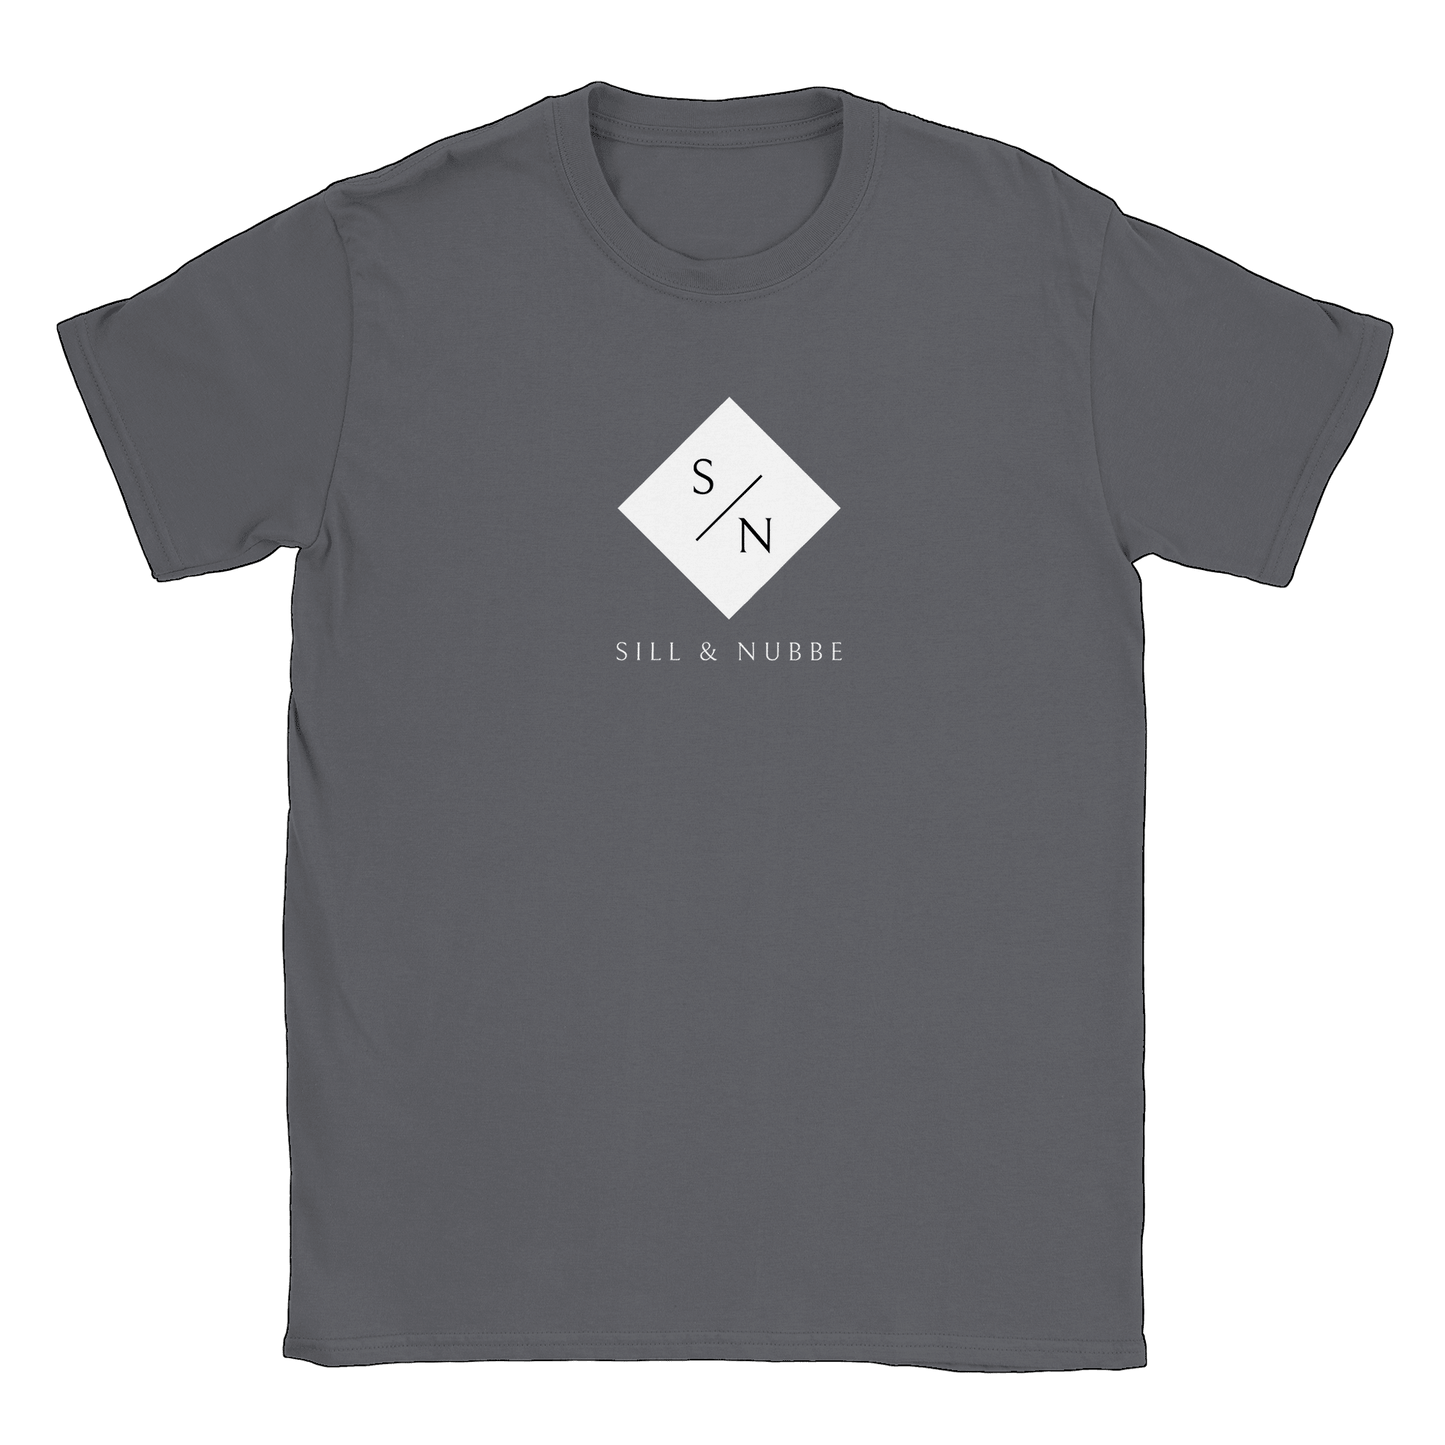 Sill och nubbe - T-shirt Charcoal